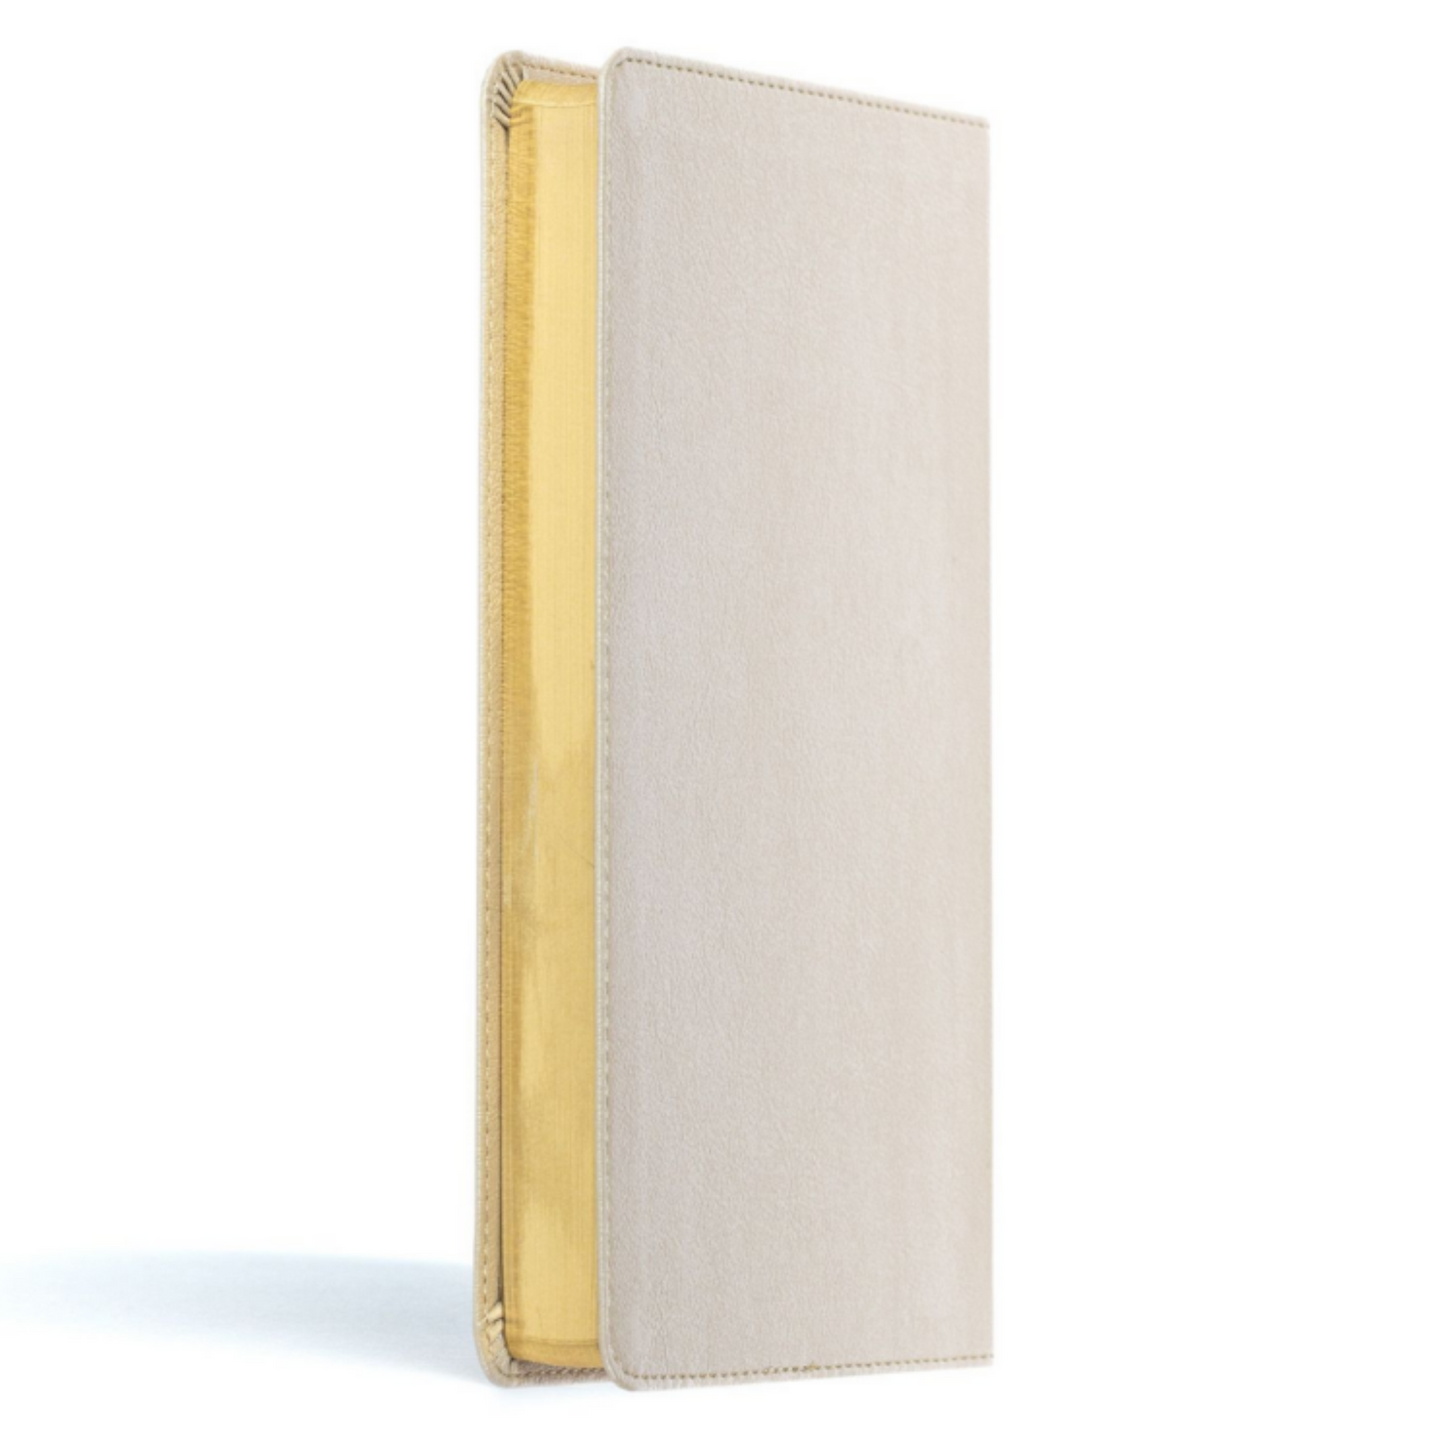 KJV Thinline Bible--LeatherTouch, gold